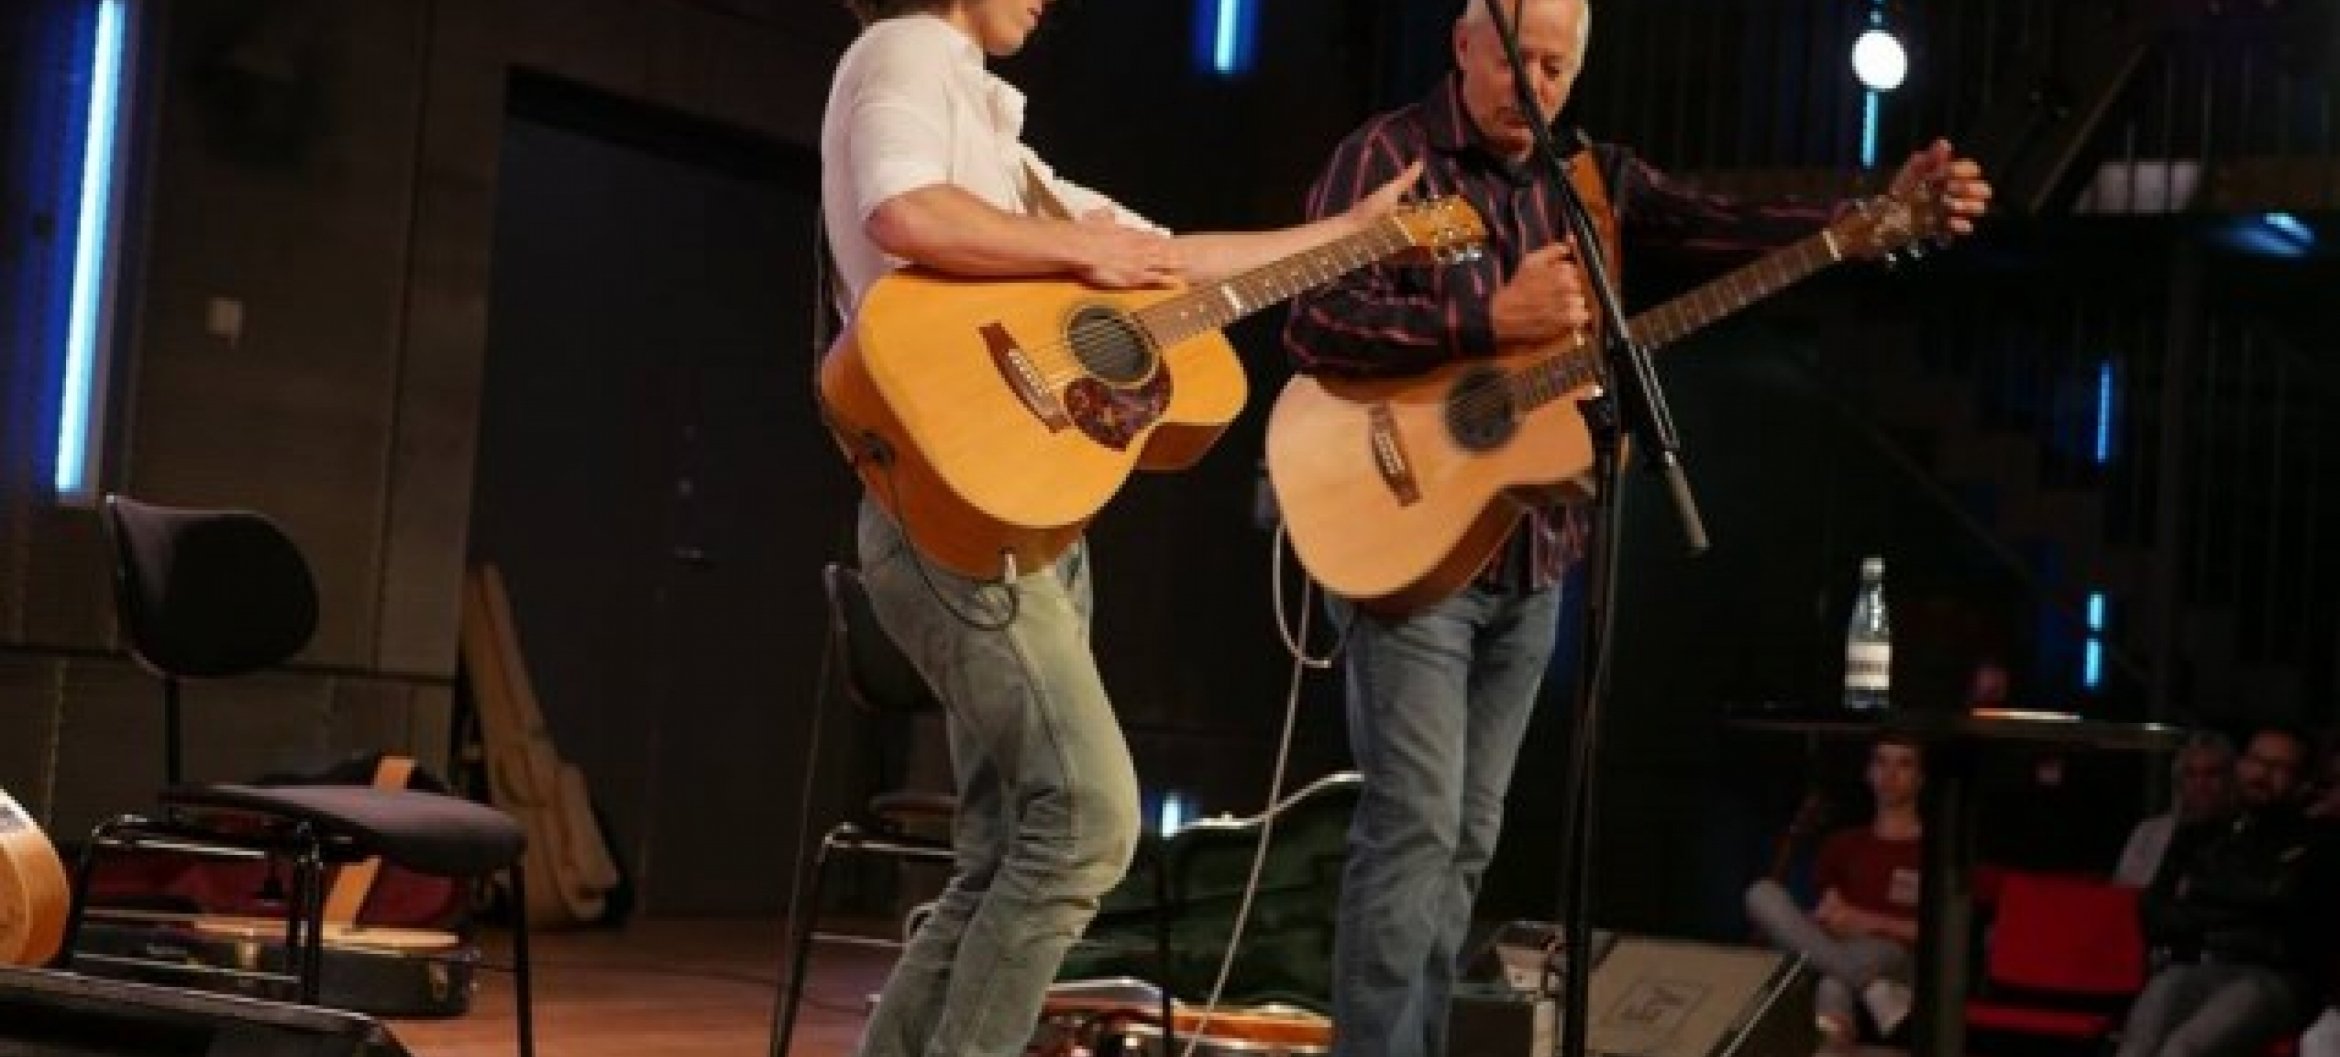 Mart Hillen duetting with Tommy Emmanuels; photograph courtesy of Achterhoek Nieuws